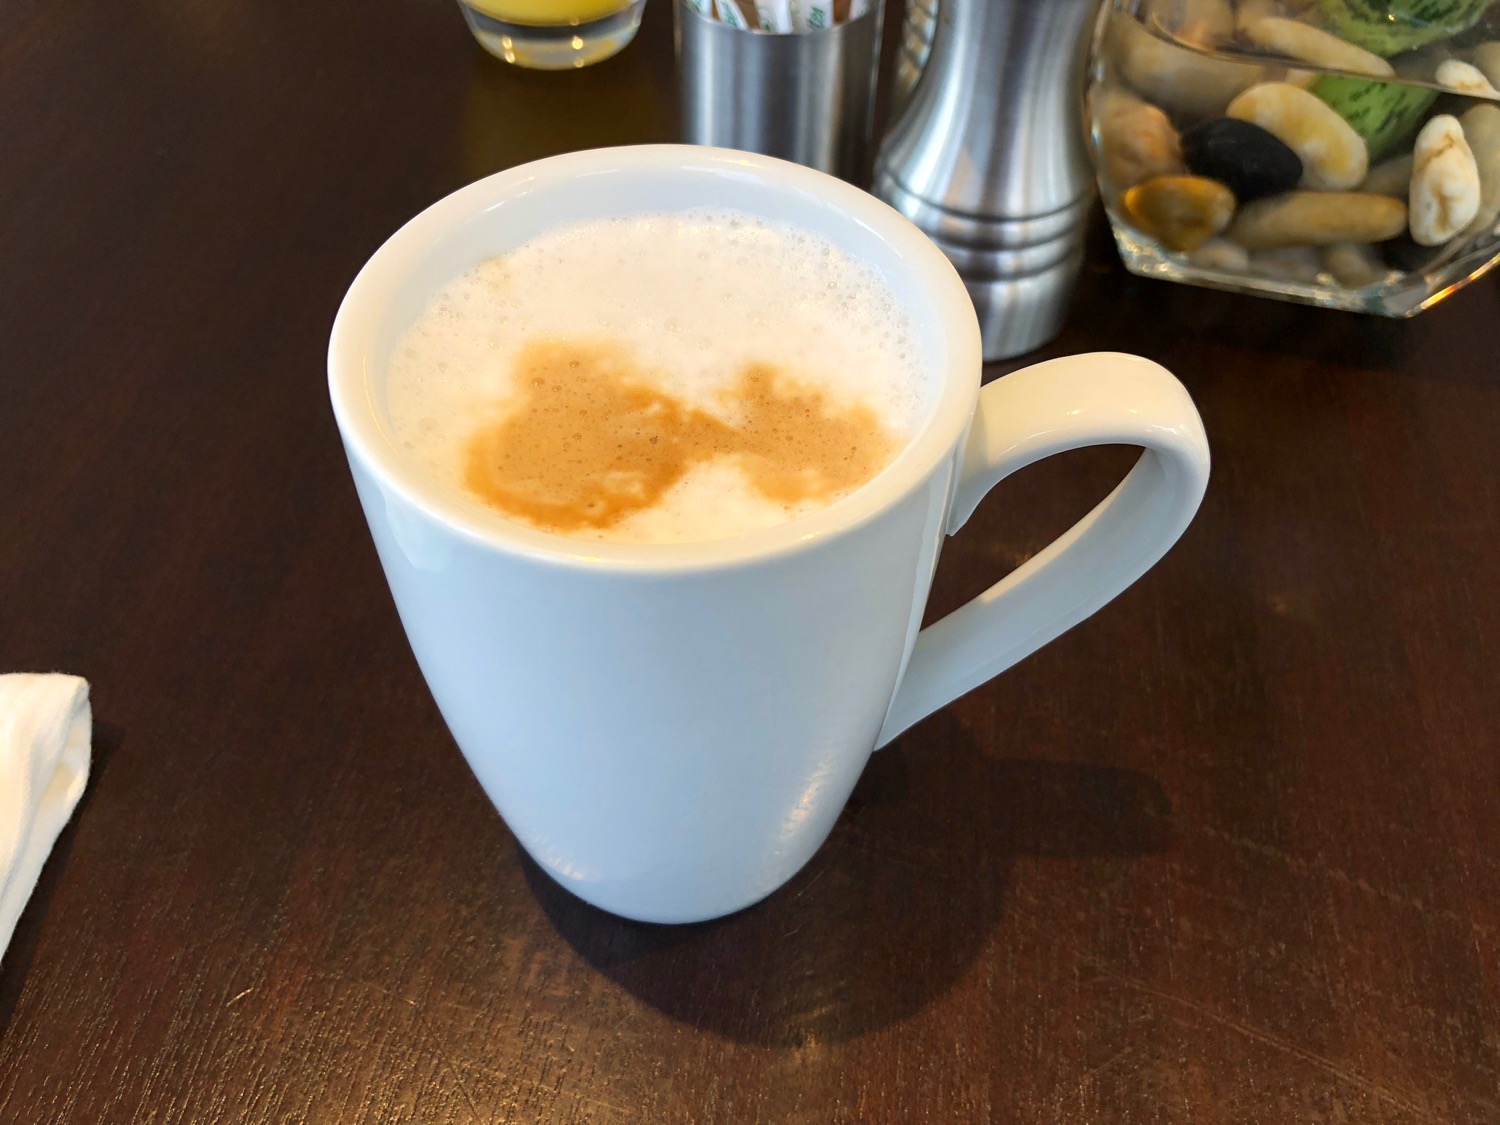 a white mug with foamy liquid in it